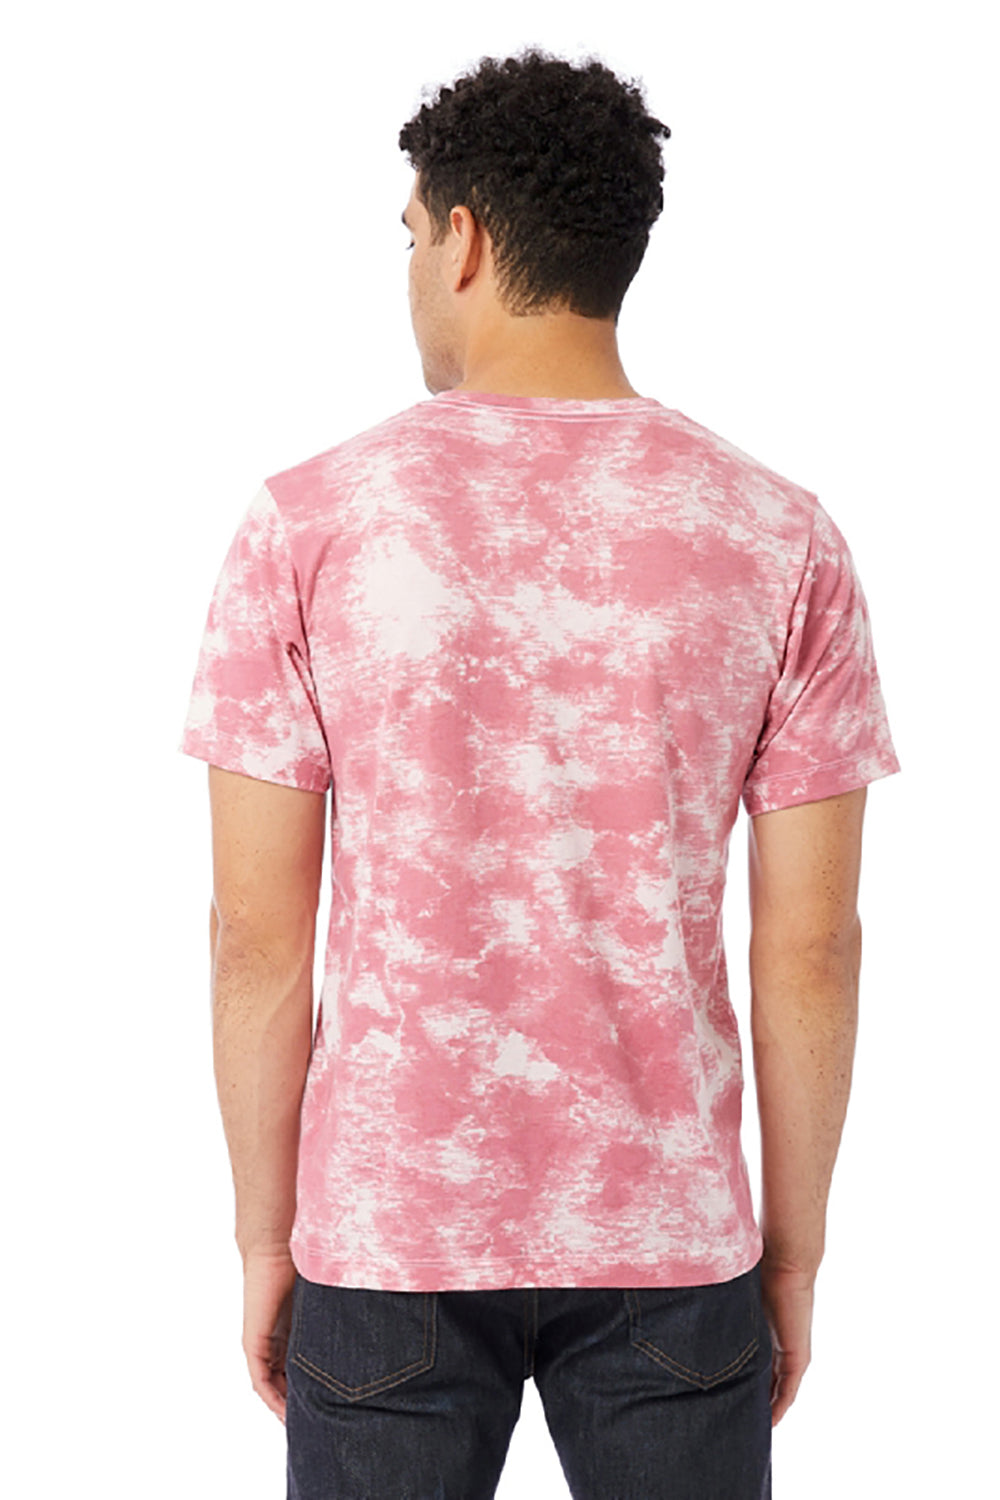 Alternative AA1070/1070 Mens Go To Jersey Short Sleeve Crewneck T-Shirt Pink Tie Dye Model Back